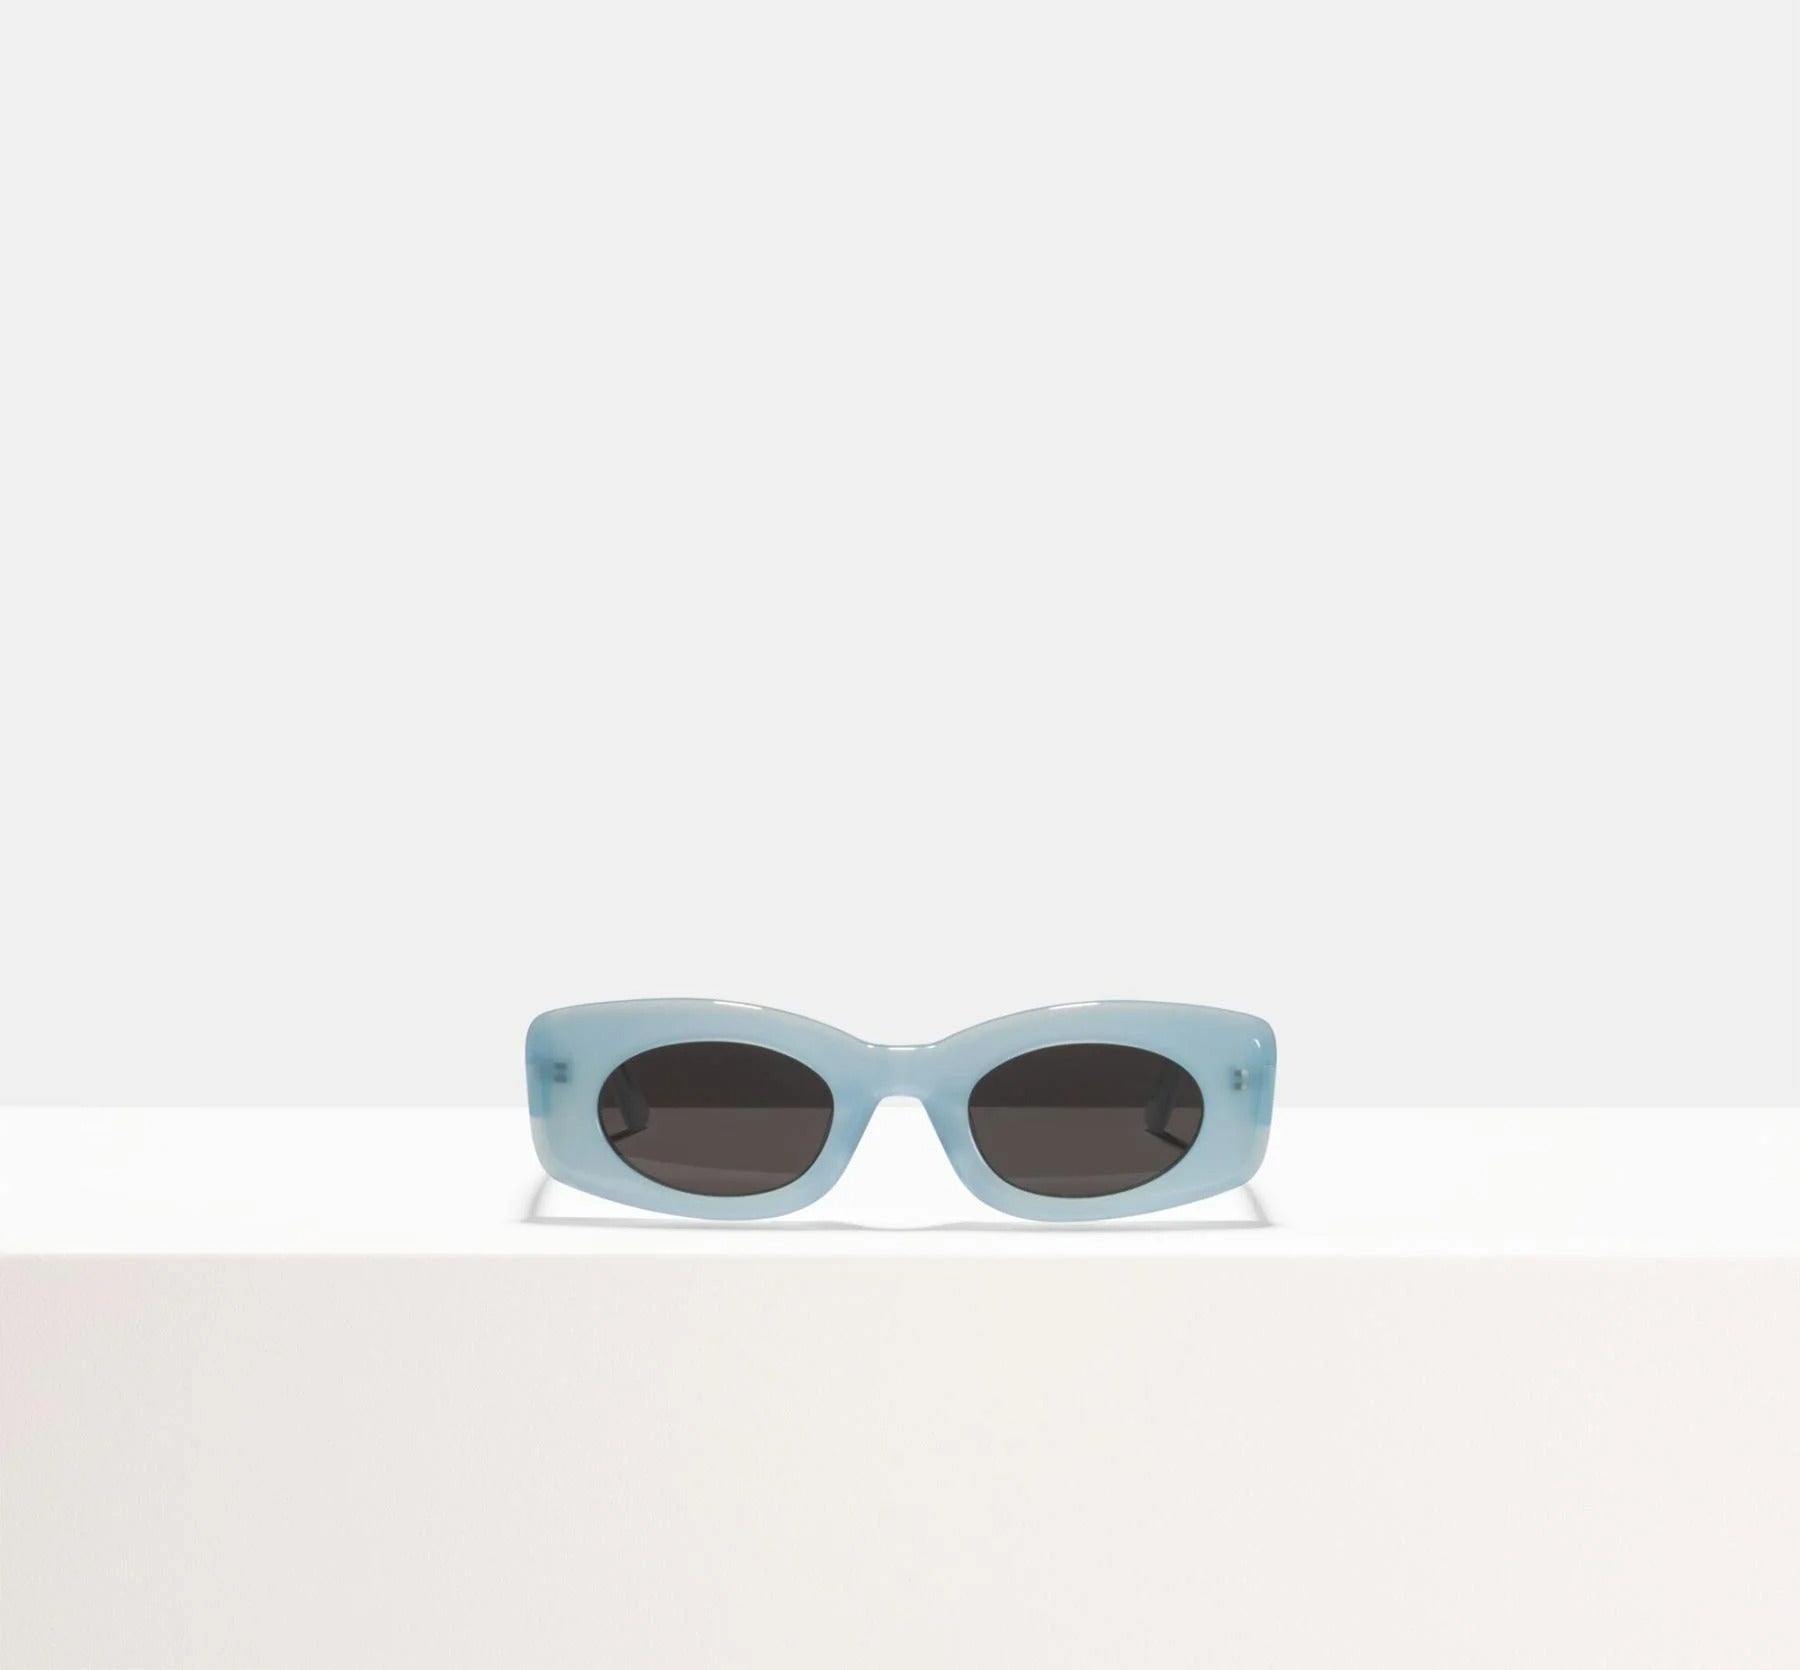 Learn more about Tate Sunglasses. - Tate Sunglasses